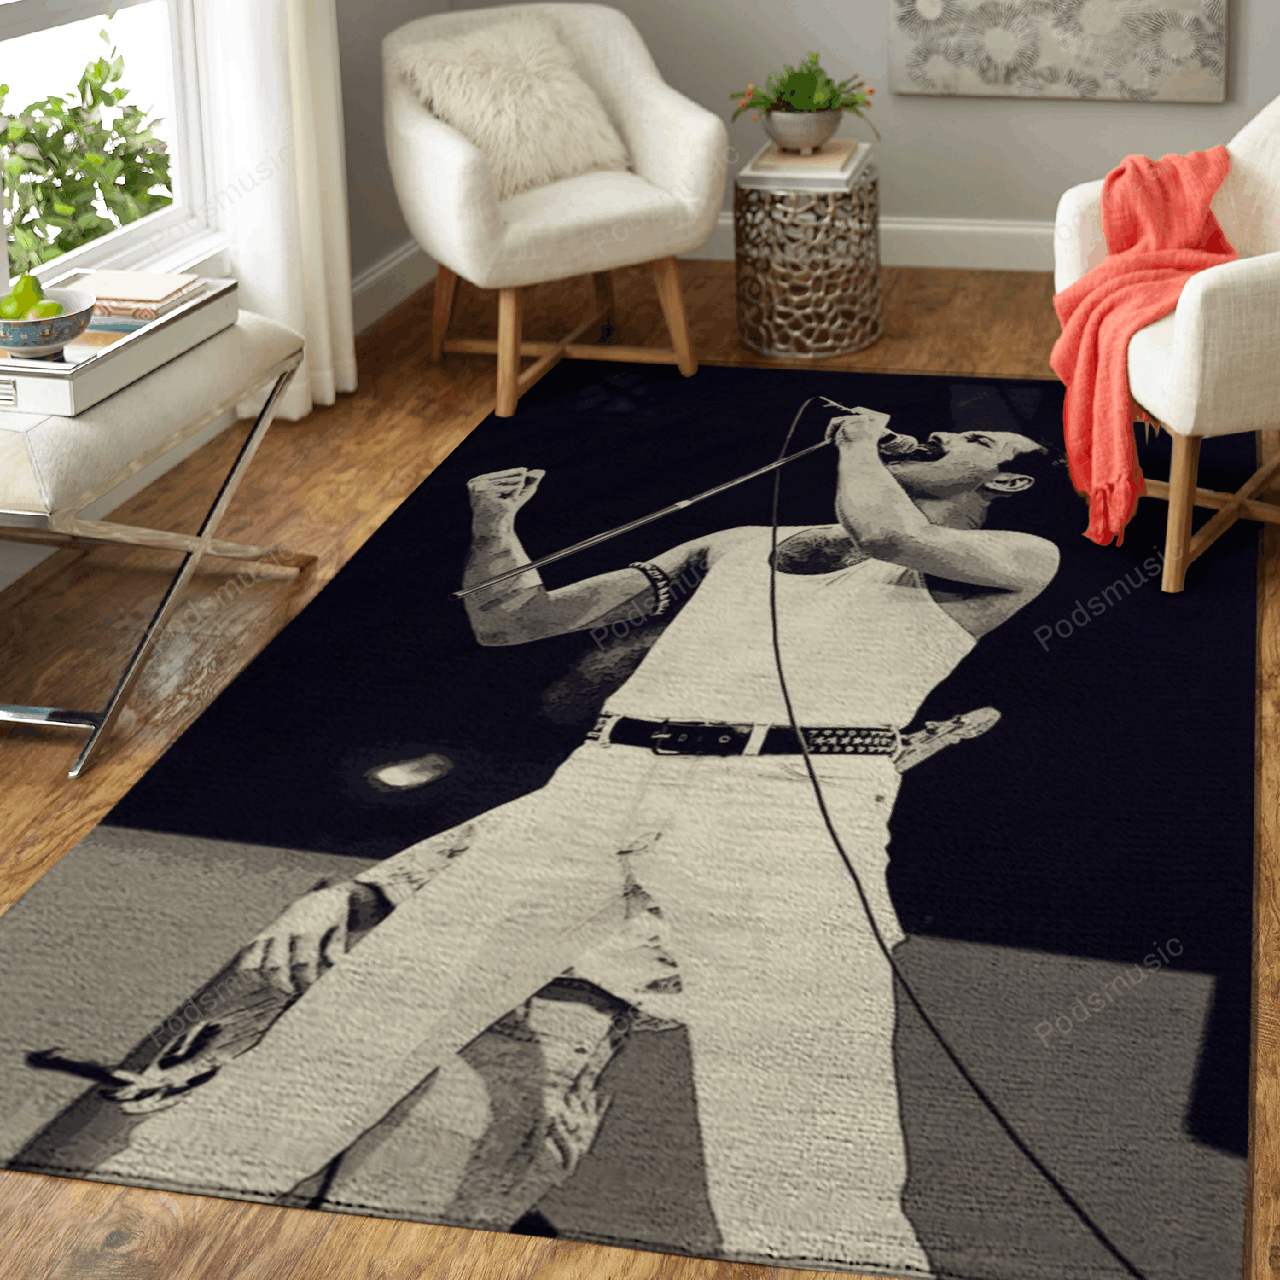 Freddie Mercury 14 – Music Artist Art For Fans Area Rug Carpet